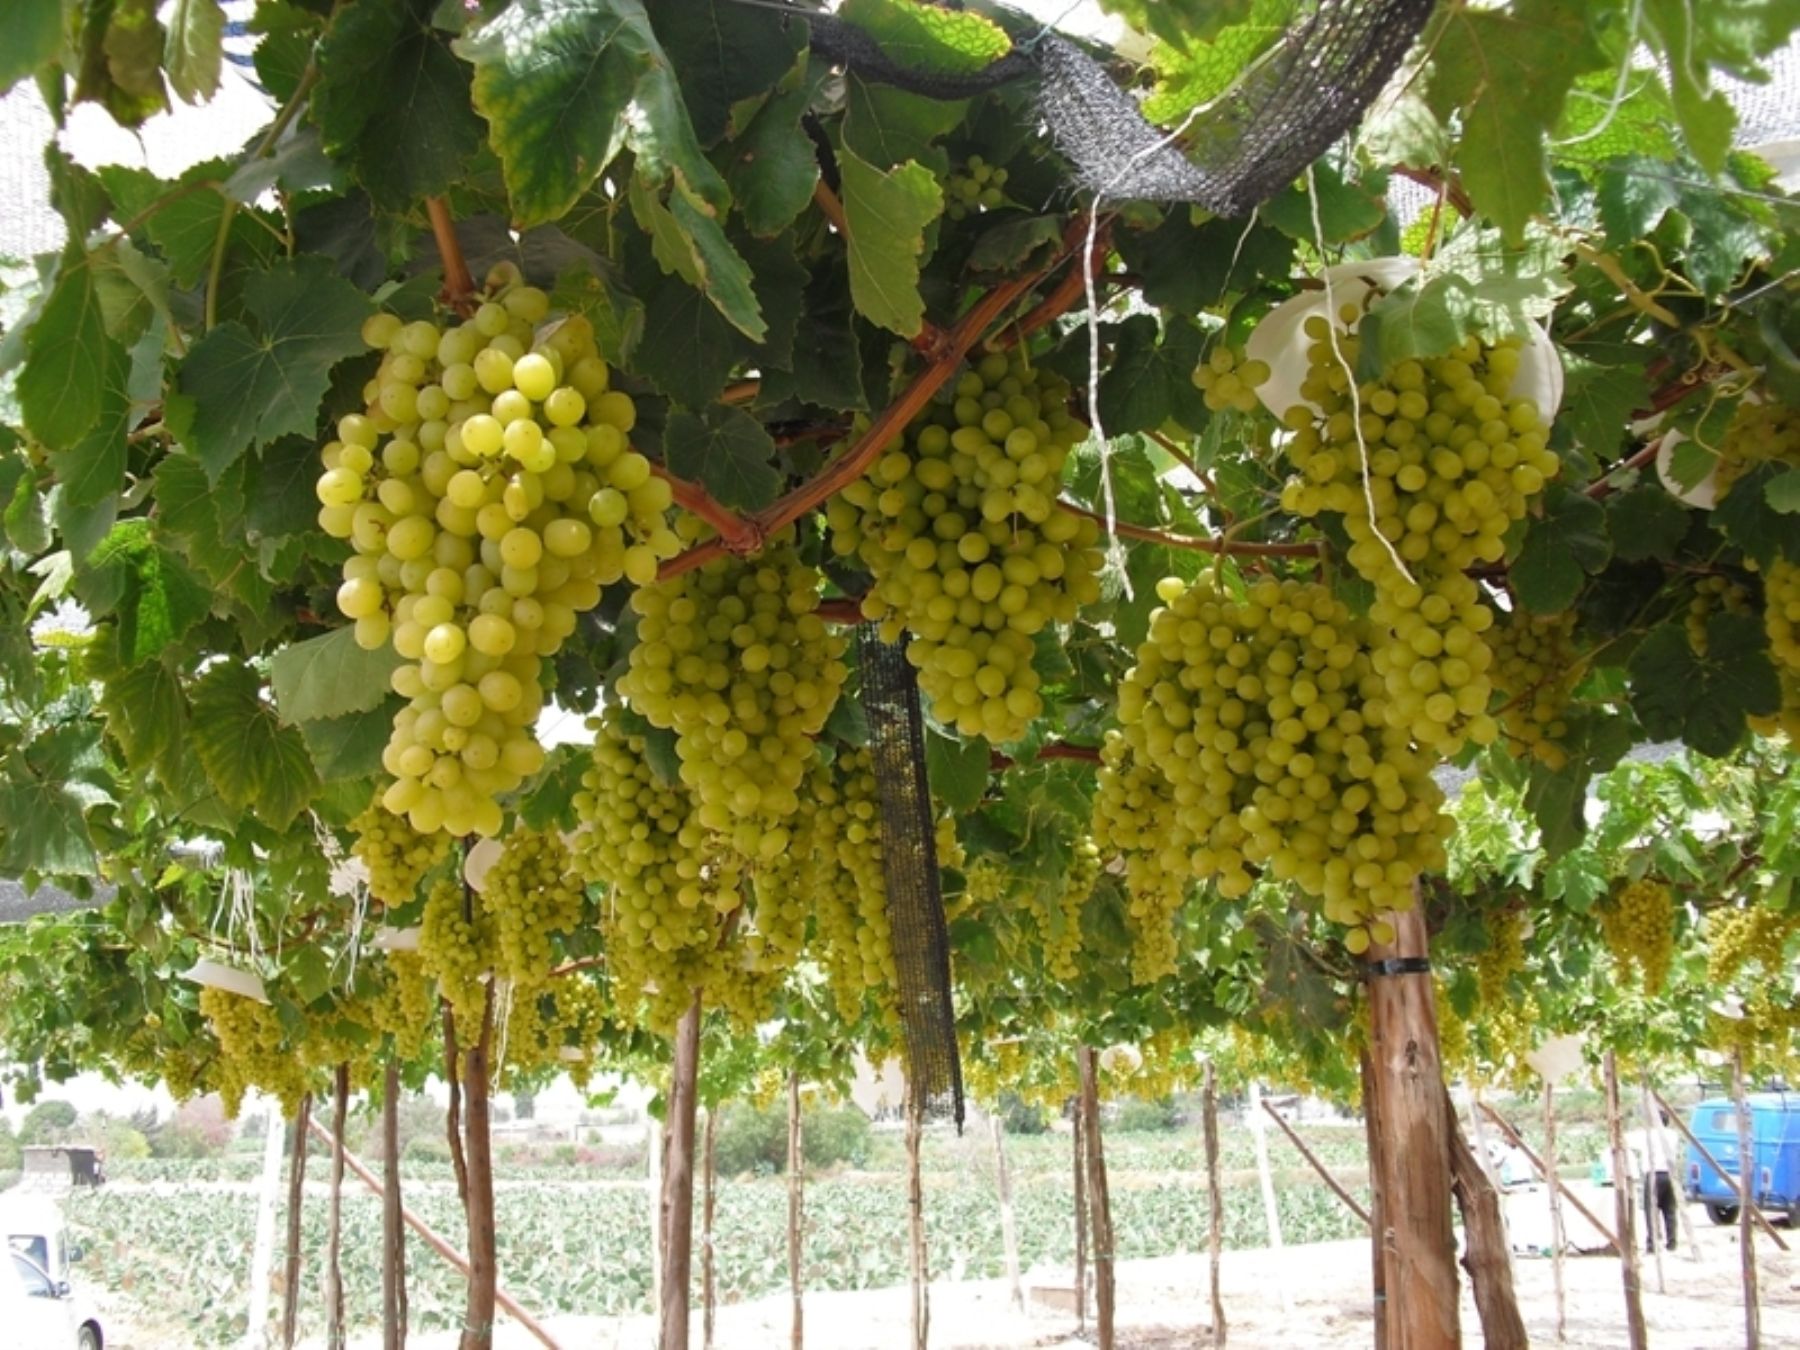 Peruvian grapes